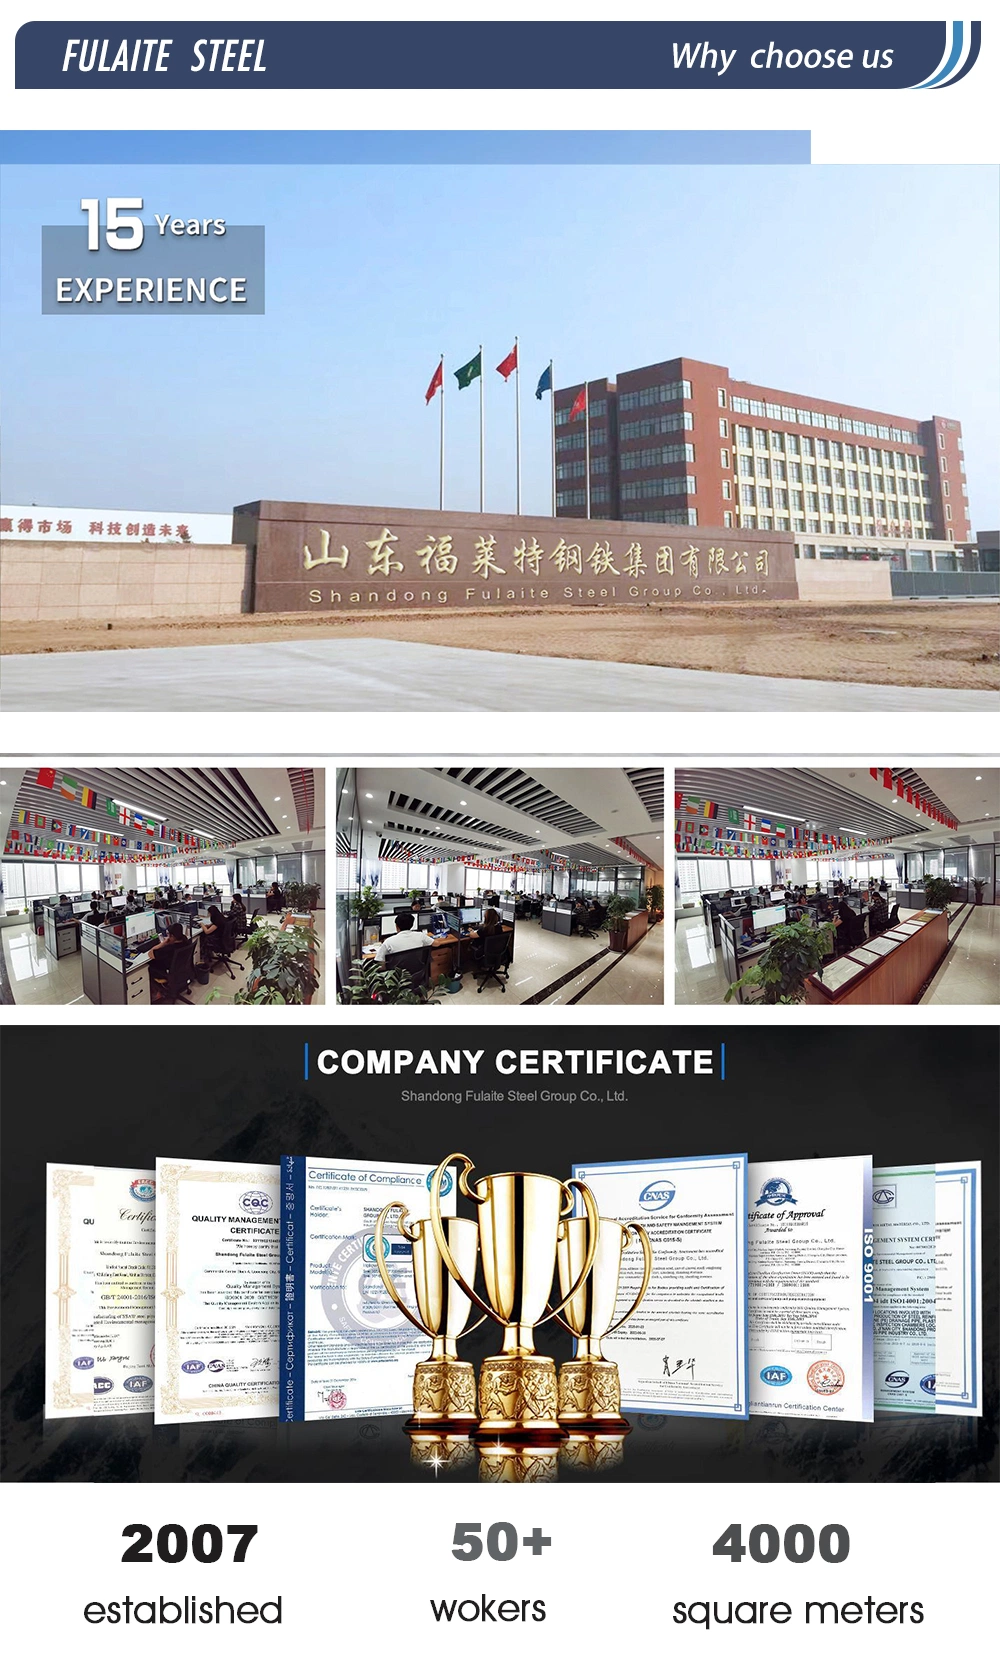 Chinese Manufacturer Prepainted Aluzinc Coils/Sheets Prepainted Roofing Printed PPGI/ Prepainted Galvalume Steel Coils 0.3mm